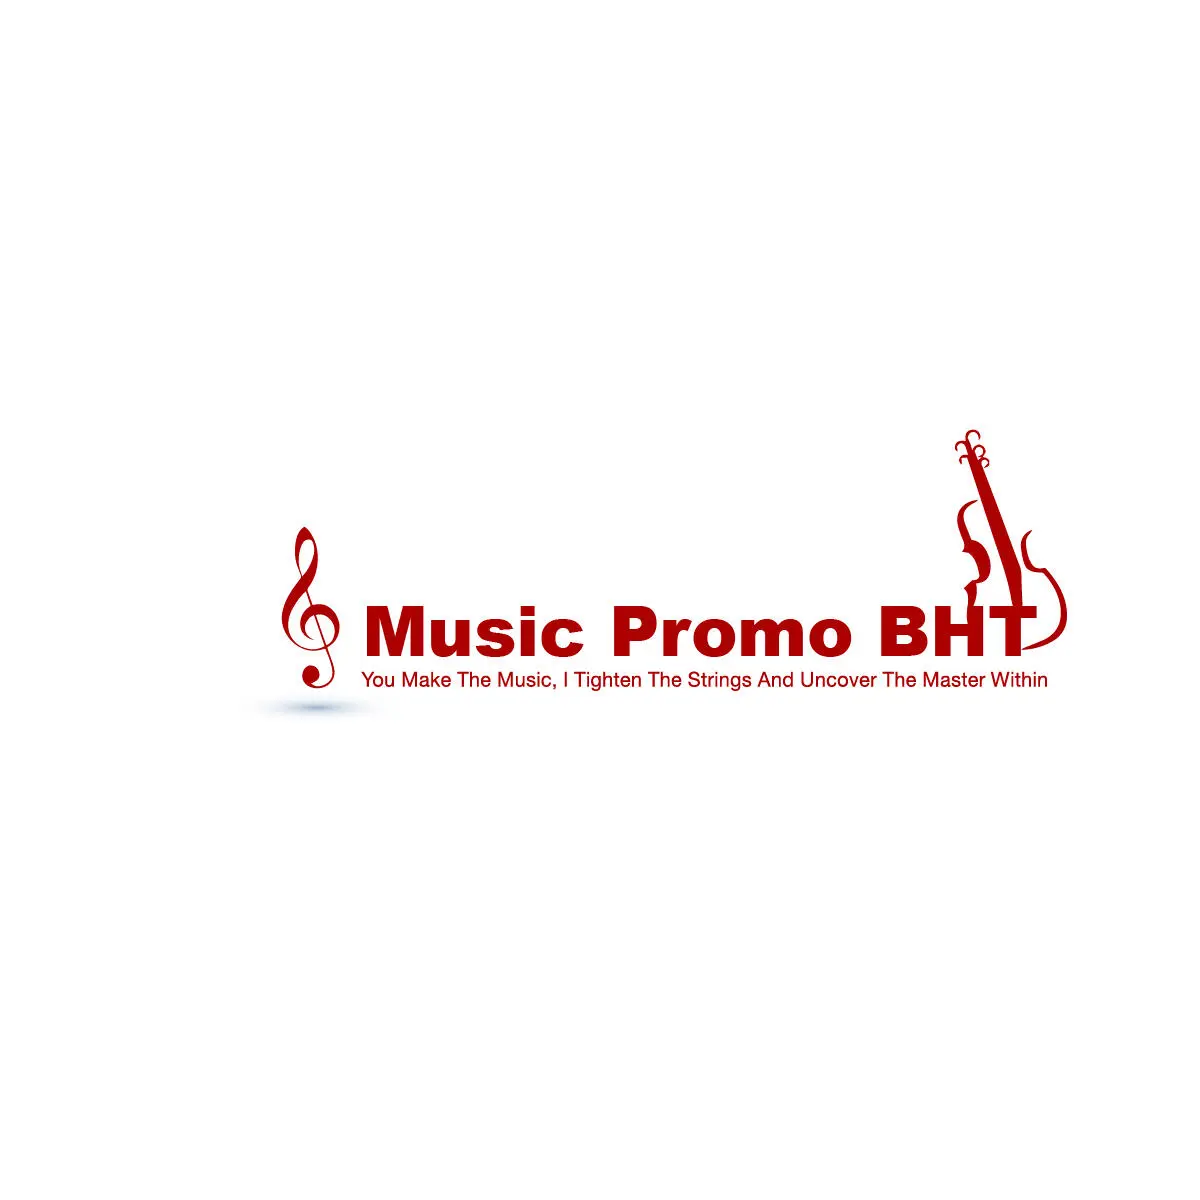 Music Promo BHT